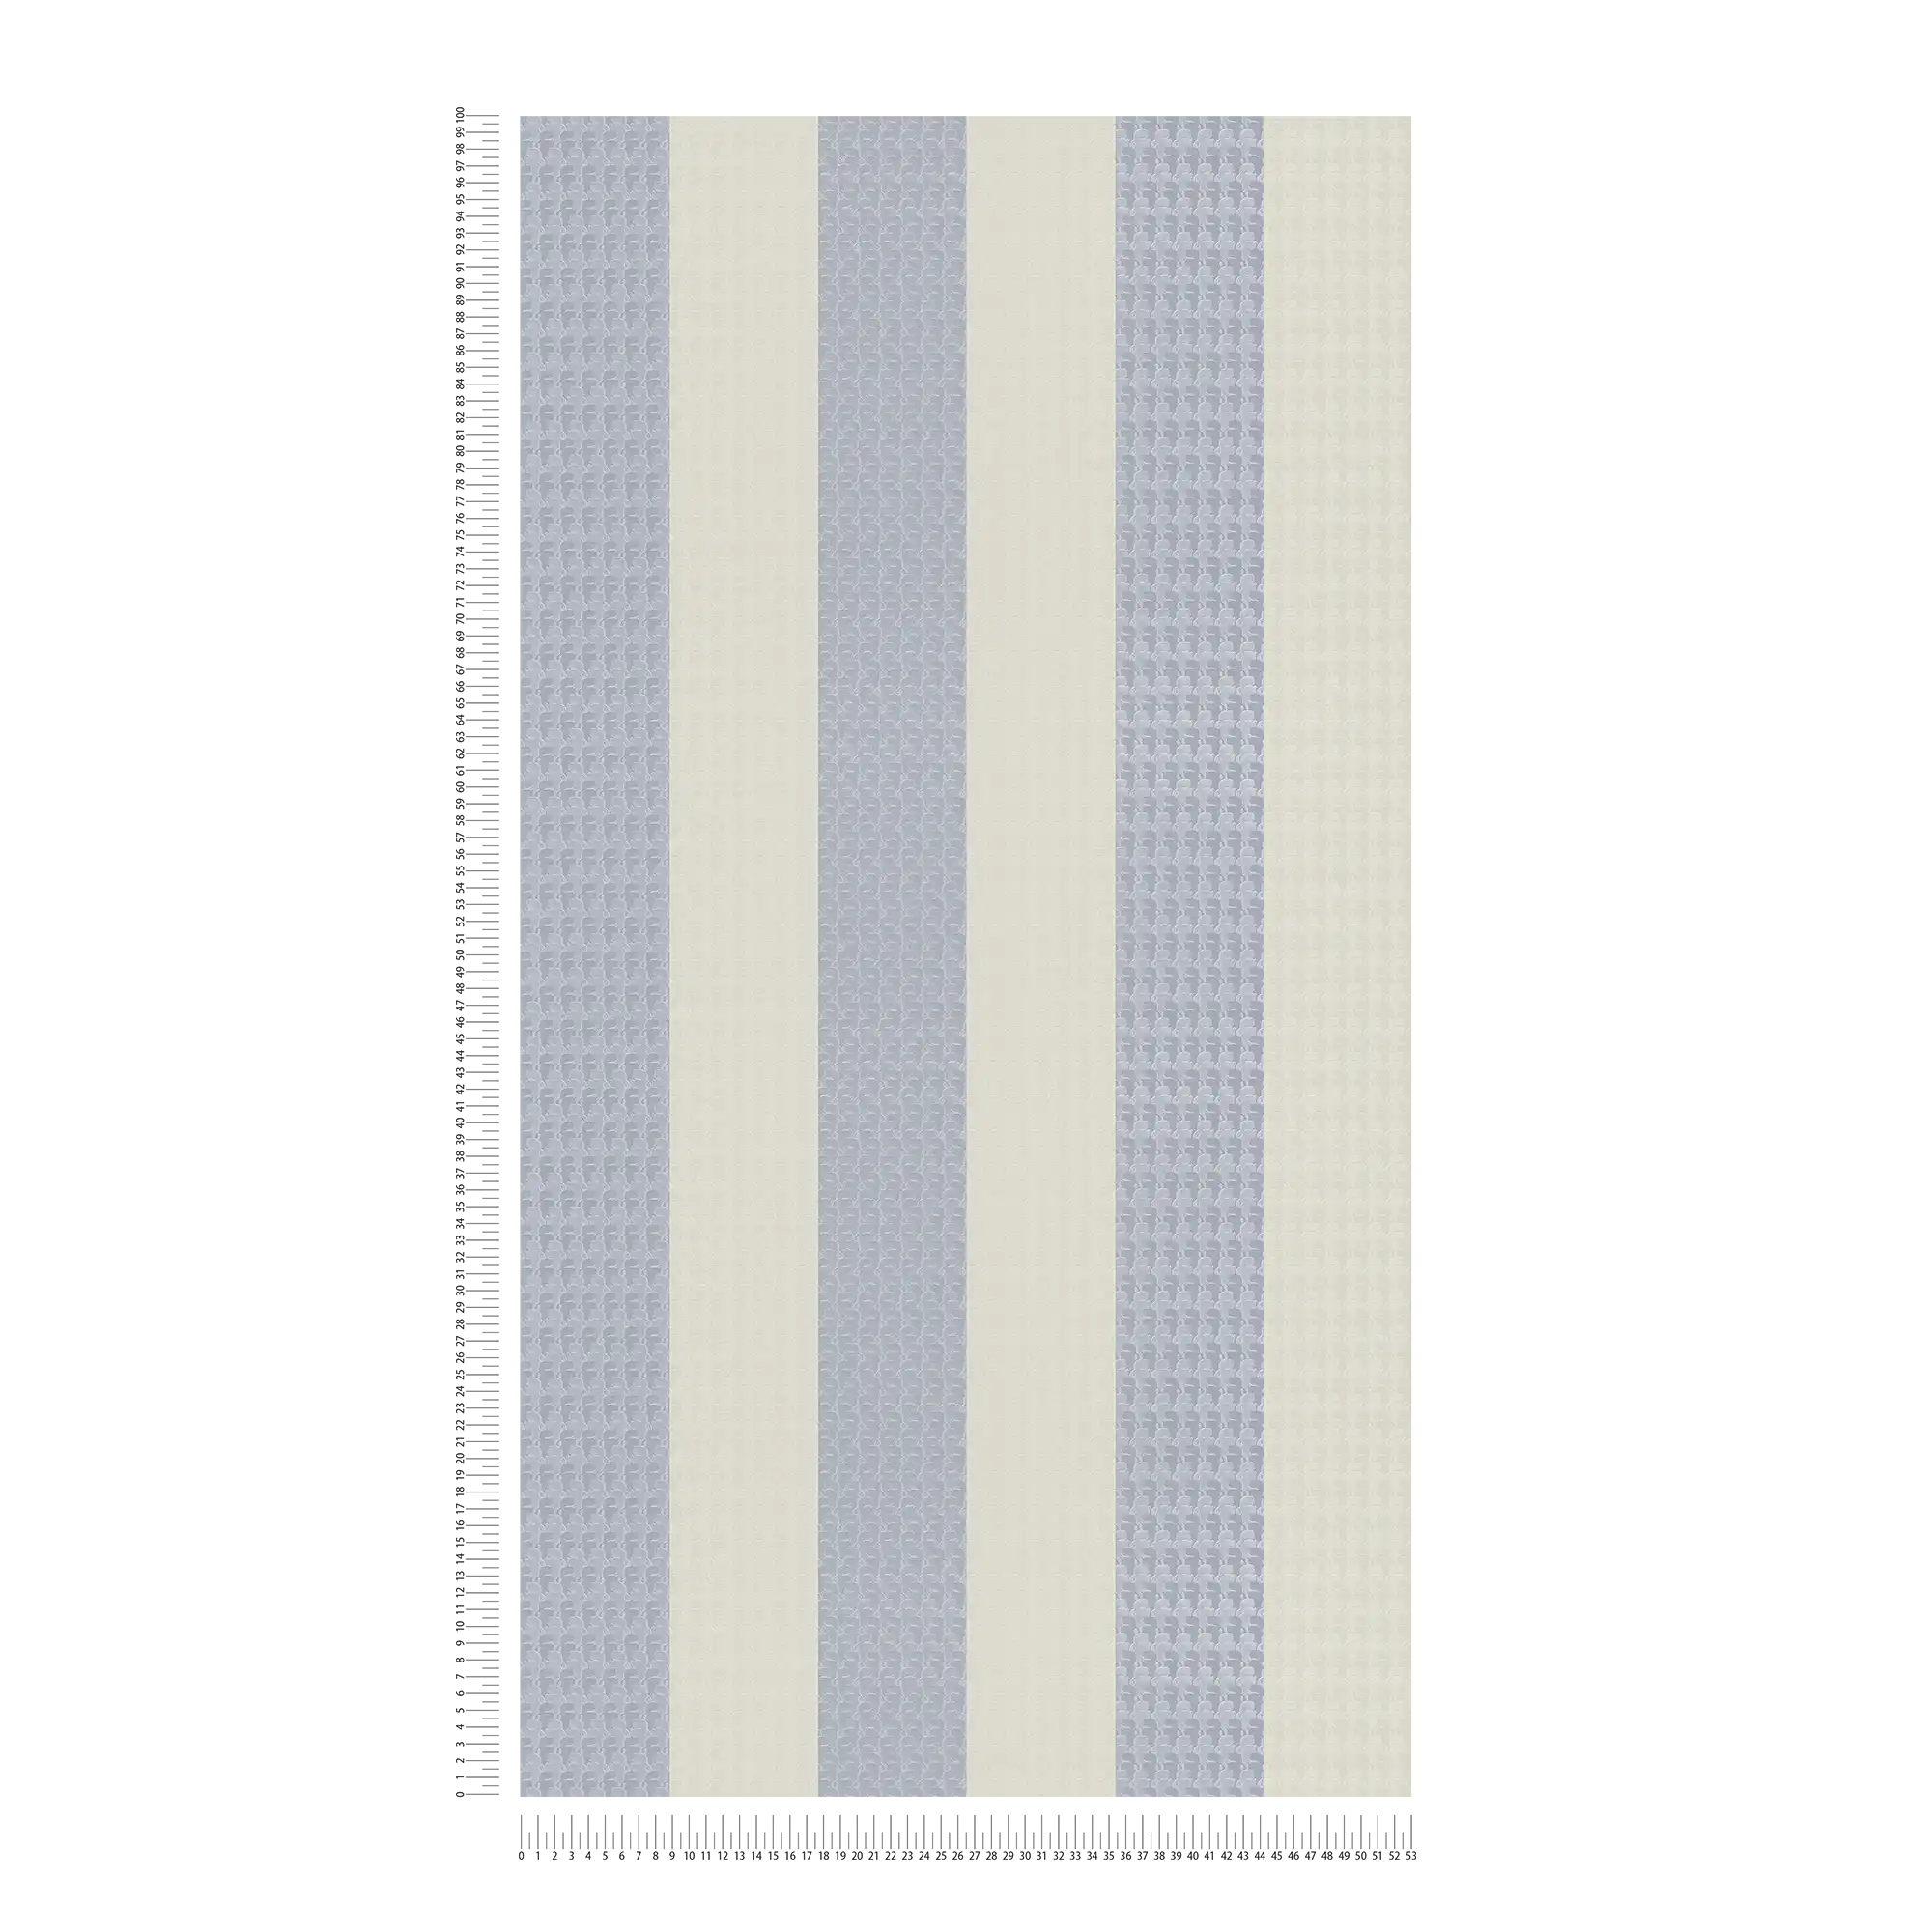             Papier peint Karl LAGERFELD rayures profil motif - gris
        